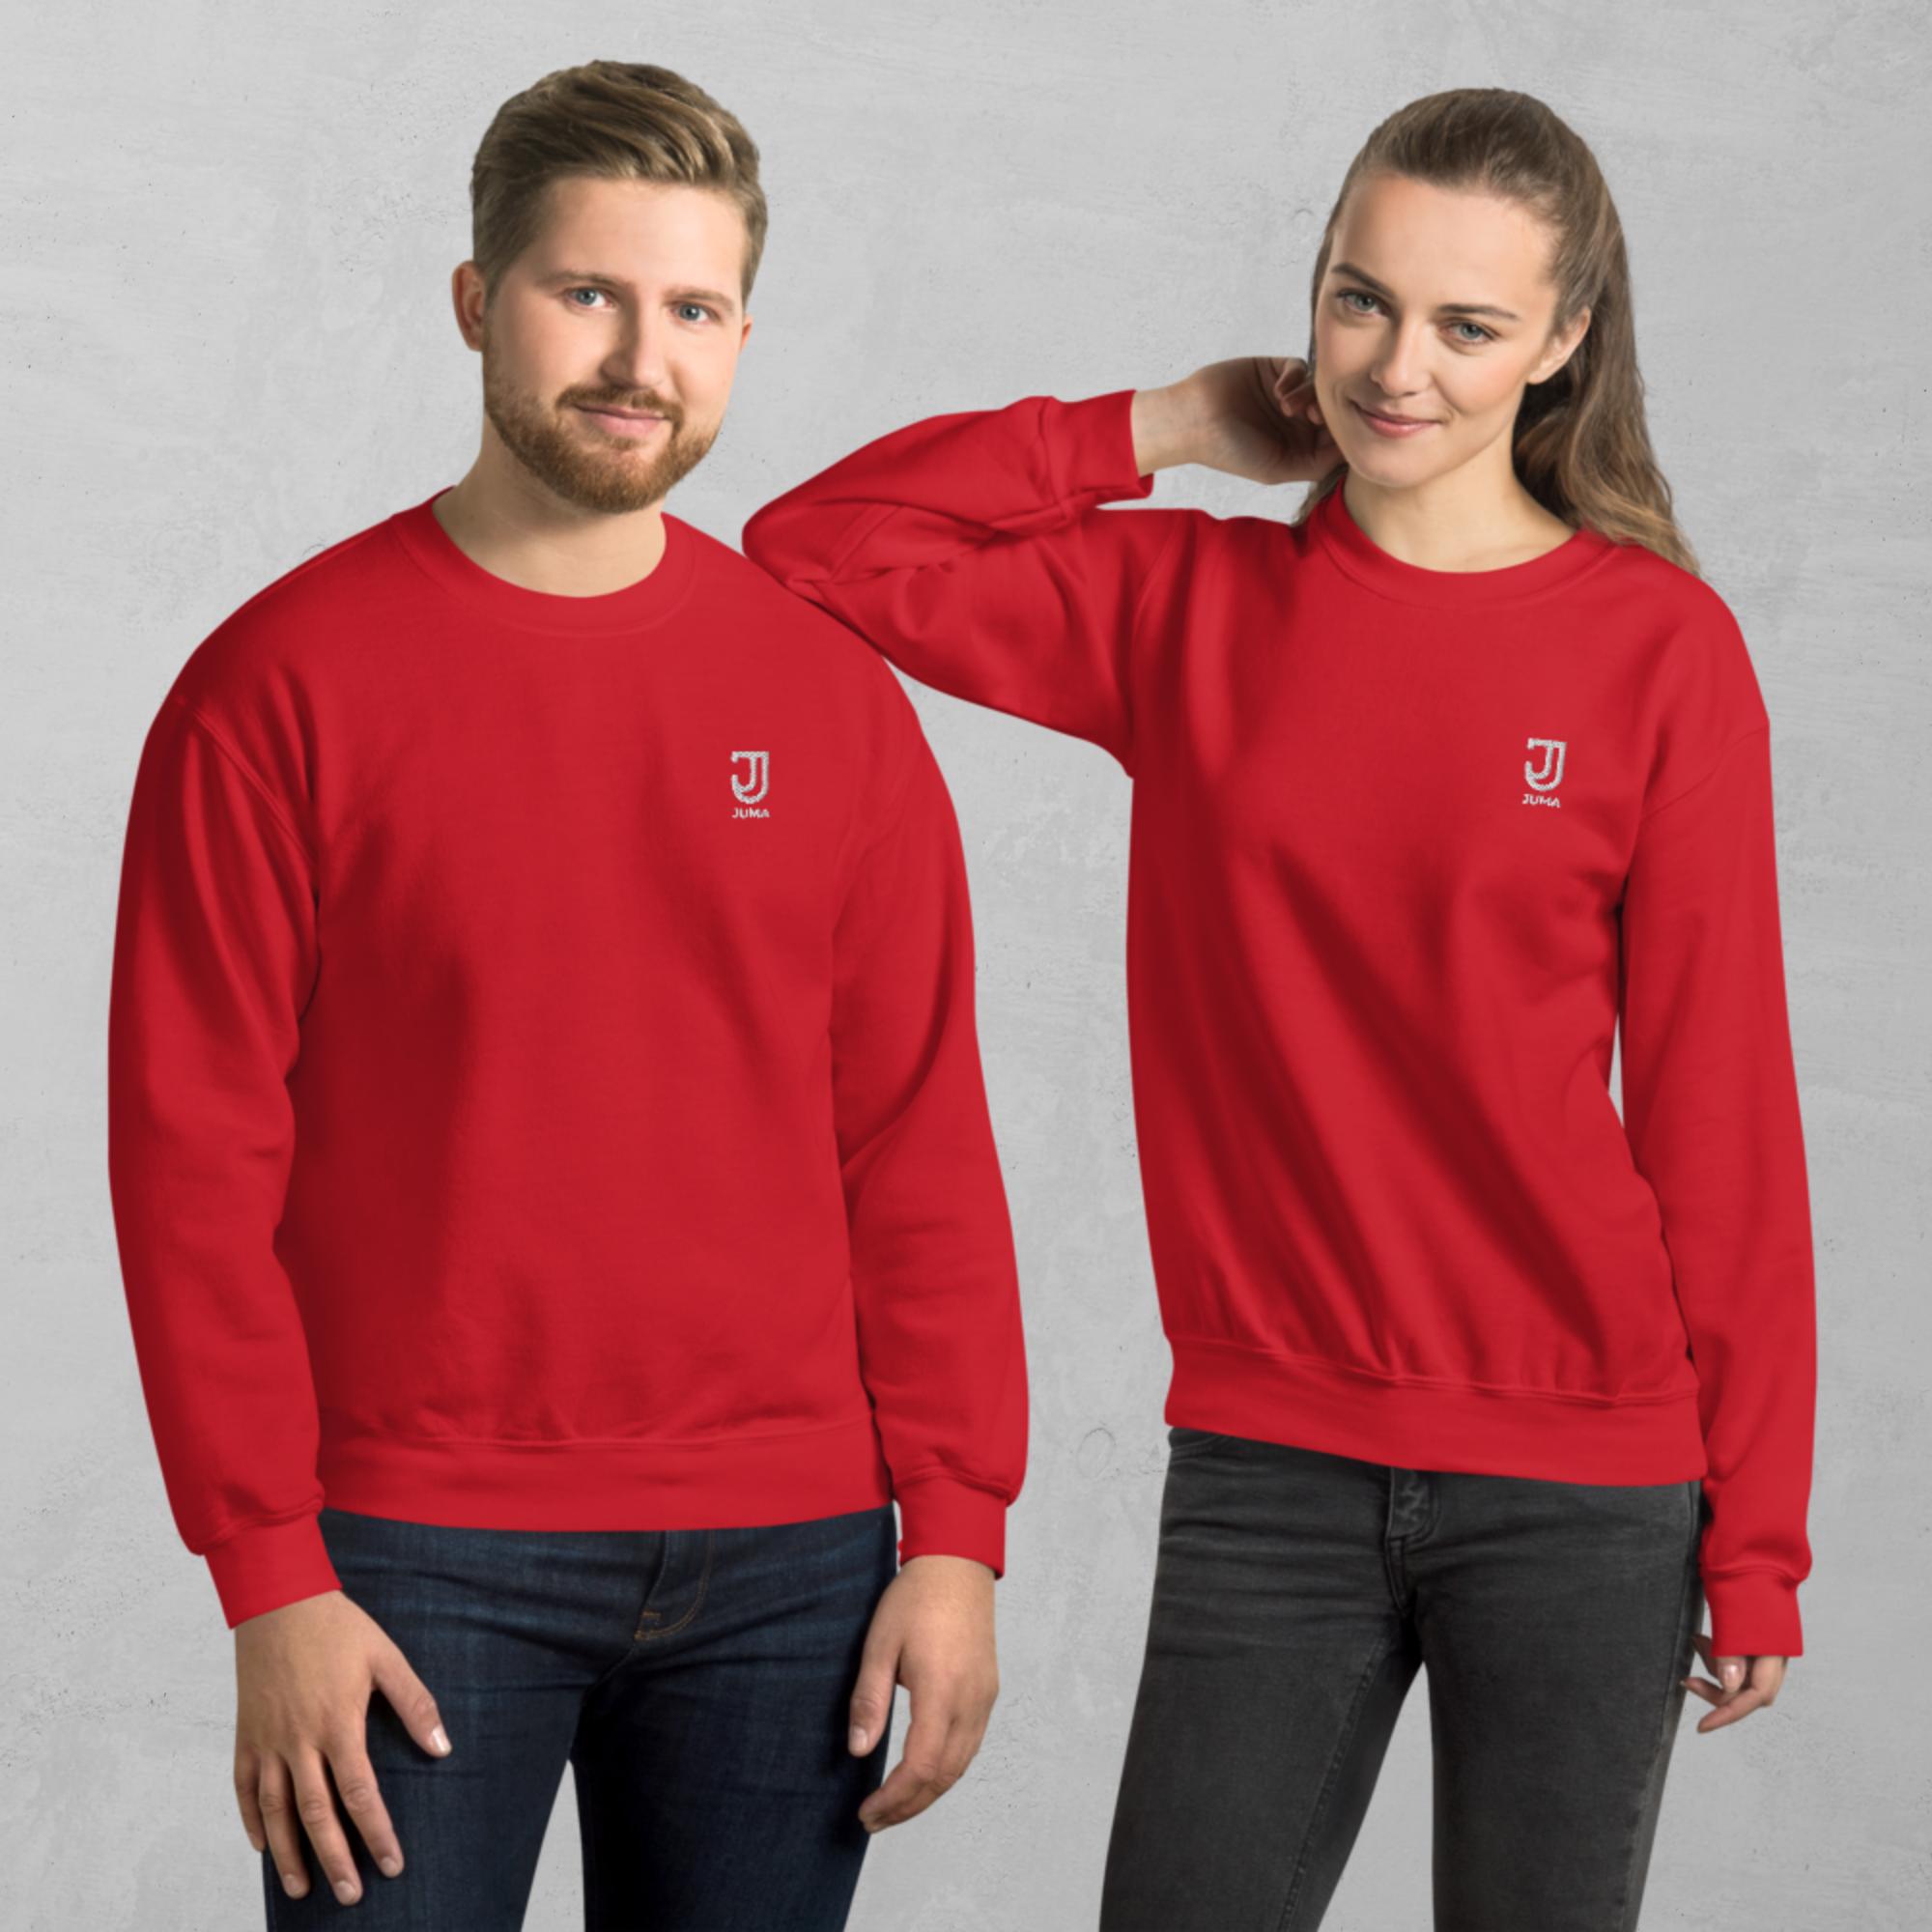 unisex-crew-neck-sweatshirt-red-front-63884a497d0b5.jpg